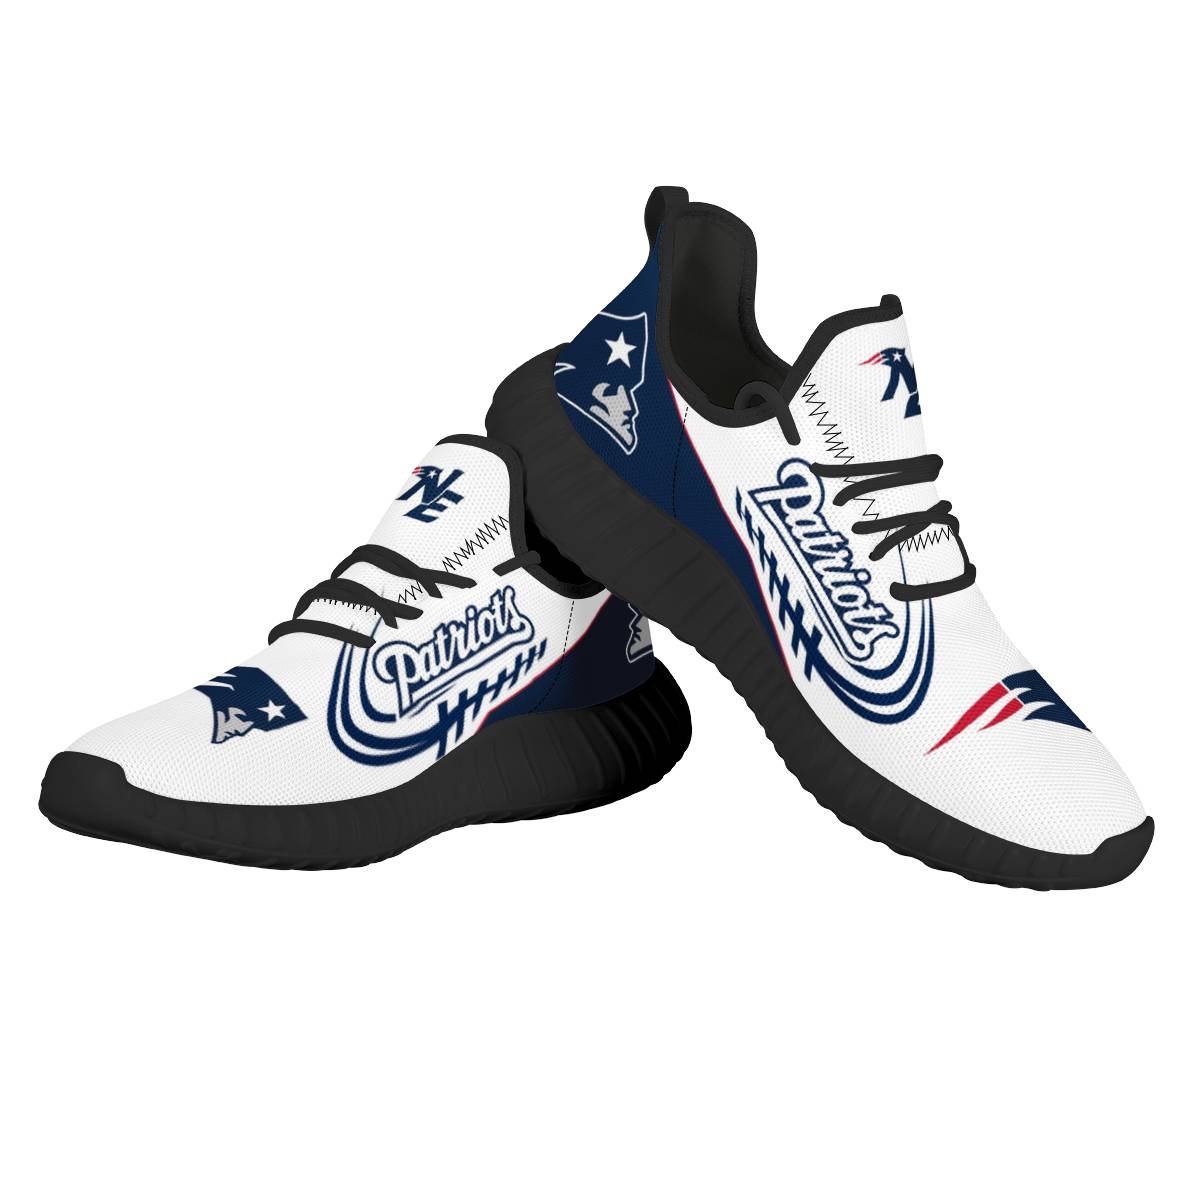 Men's NFL New England Patriots Mesh Knit Sneakers/Shoes 002